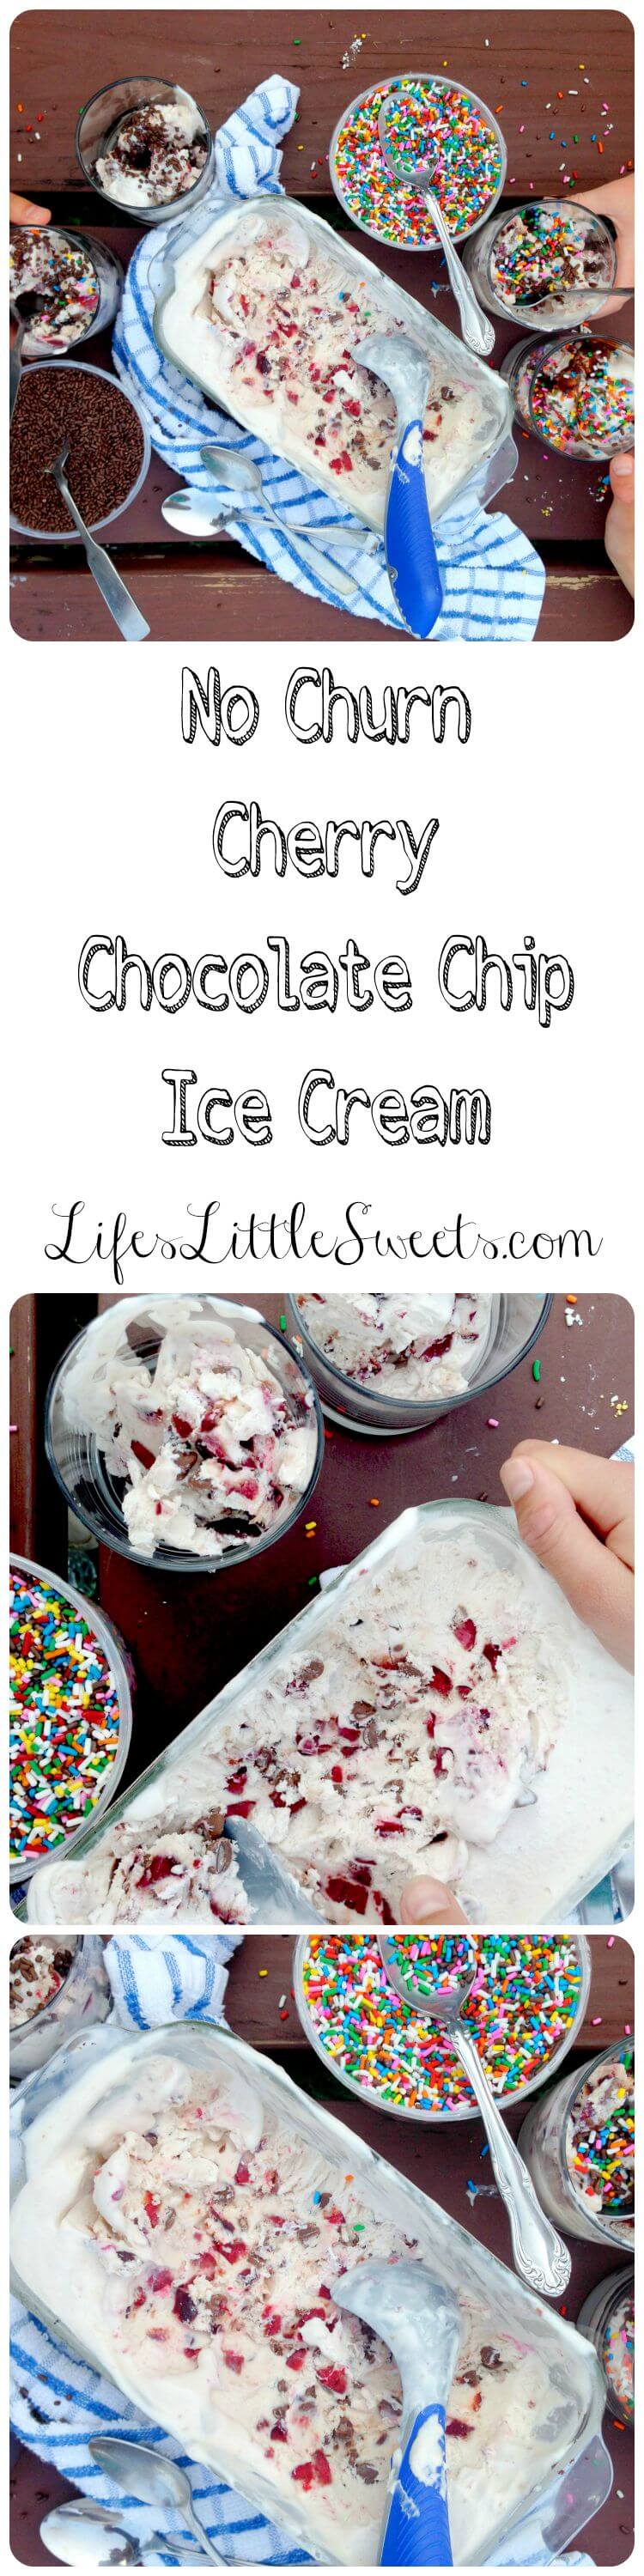 no churn cherry choc chip ice cream photo collage with sprinkles